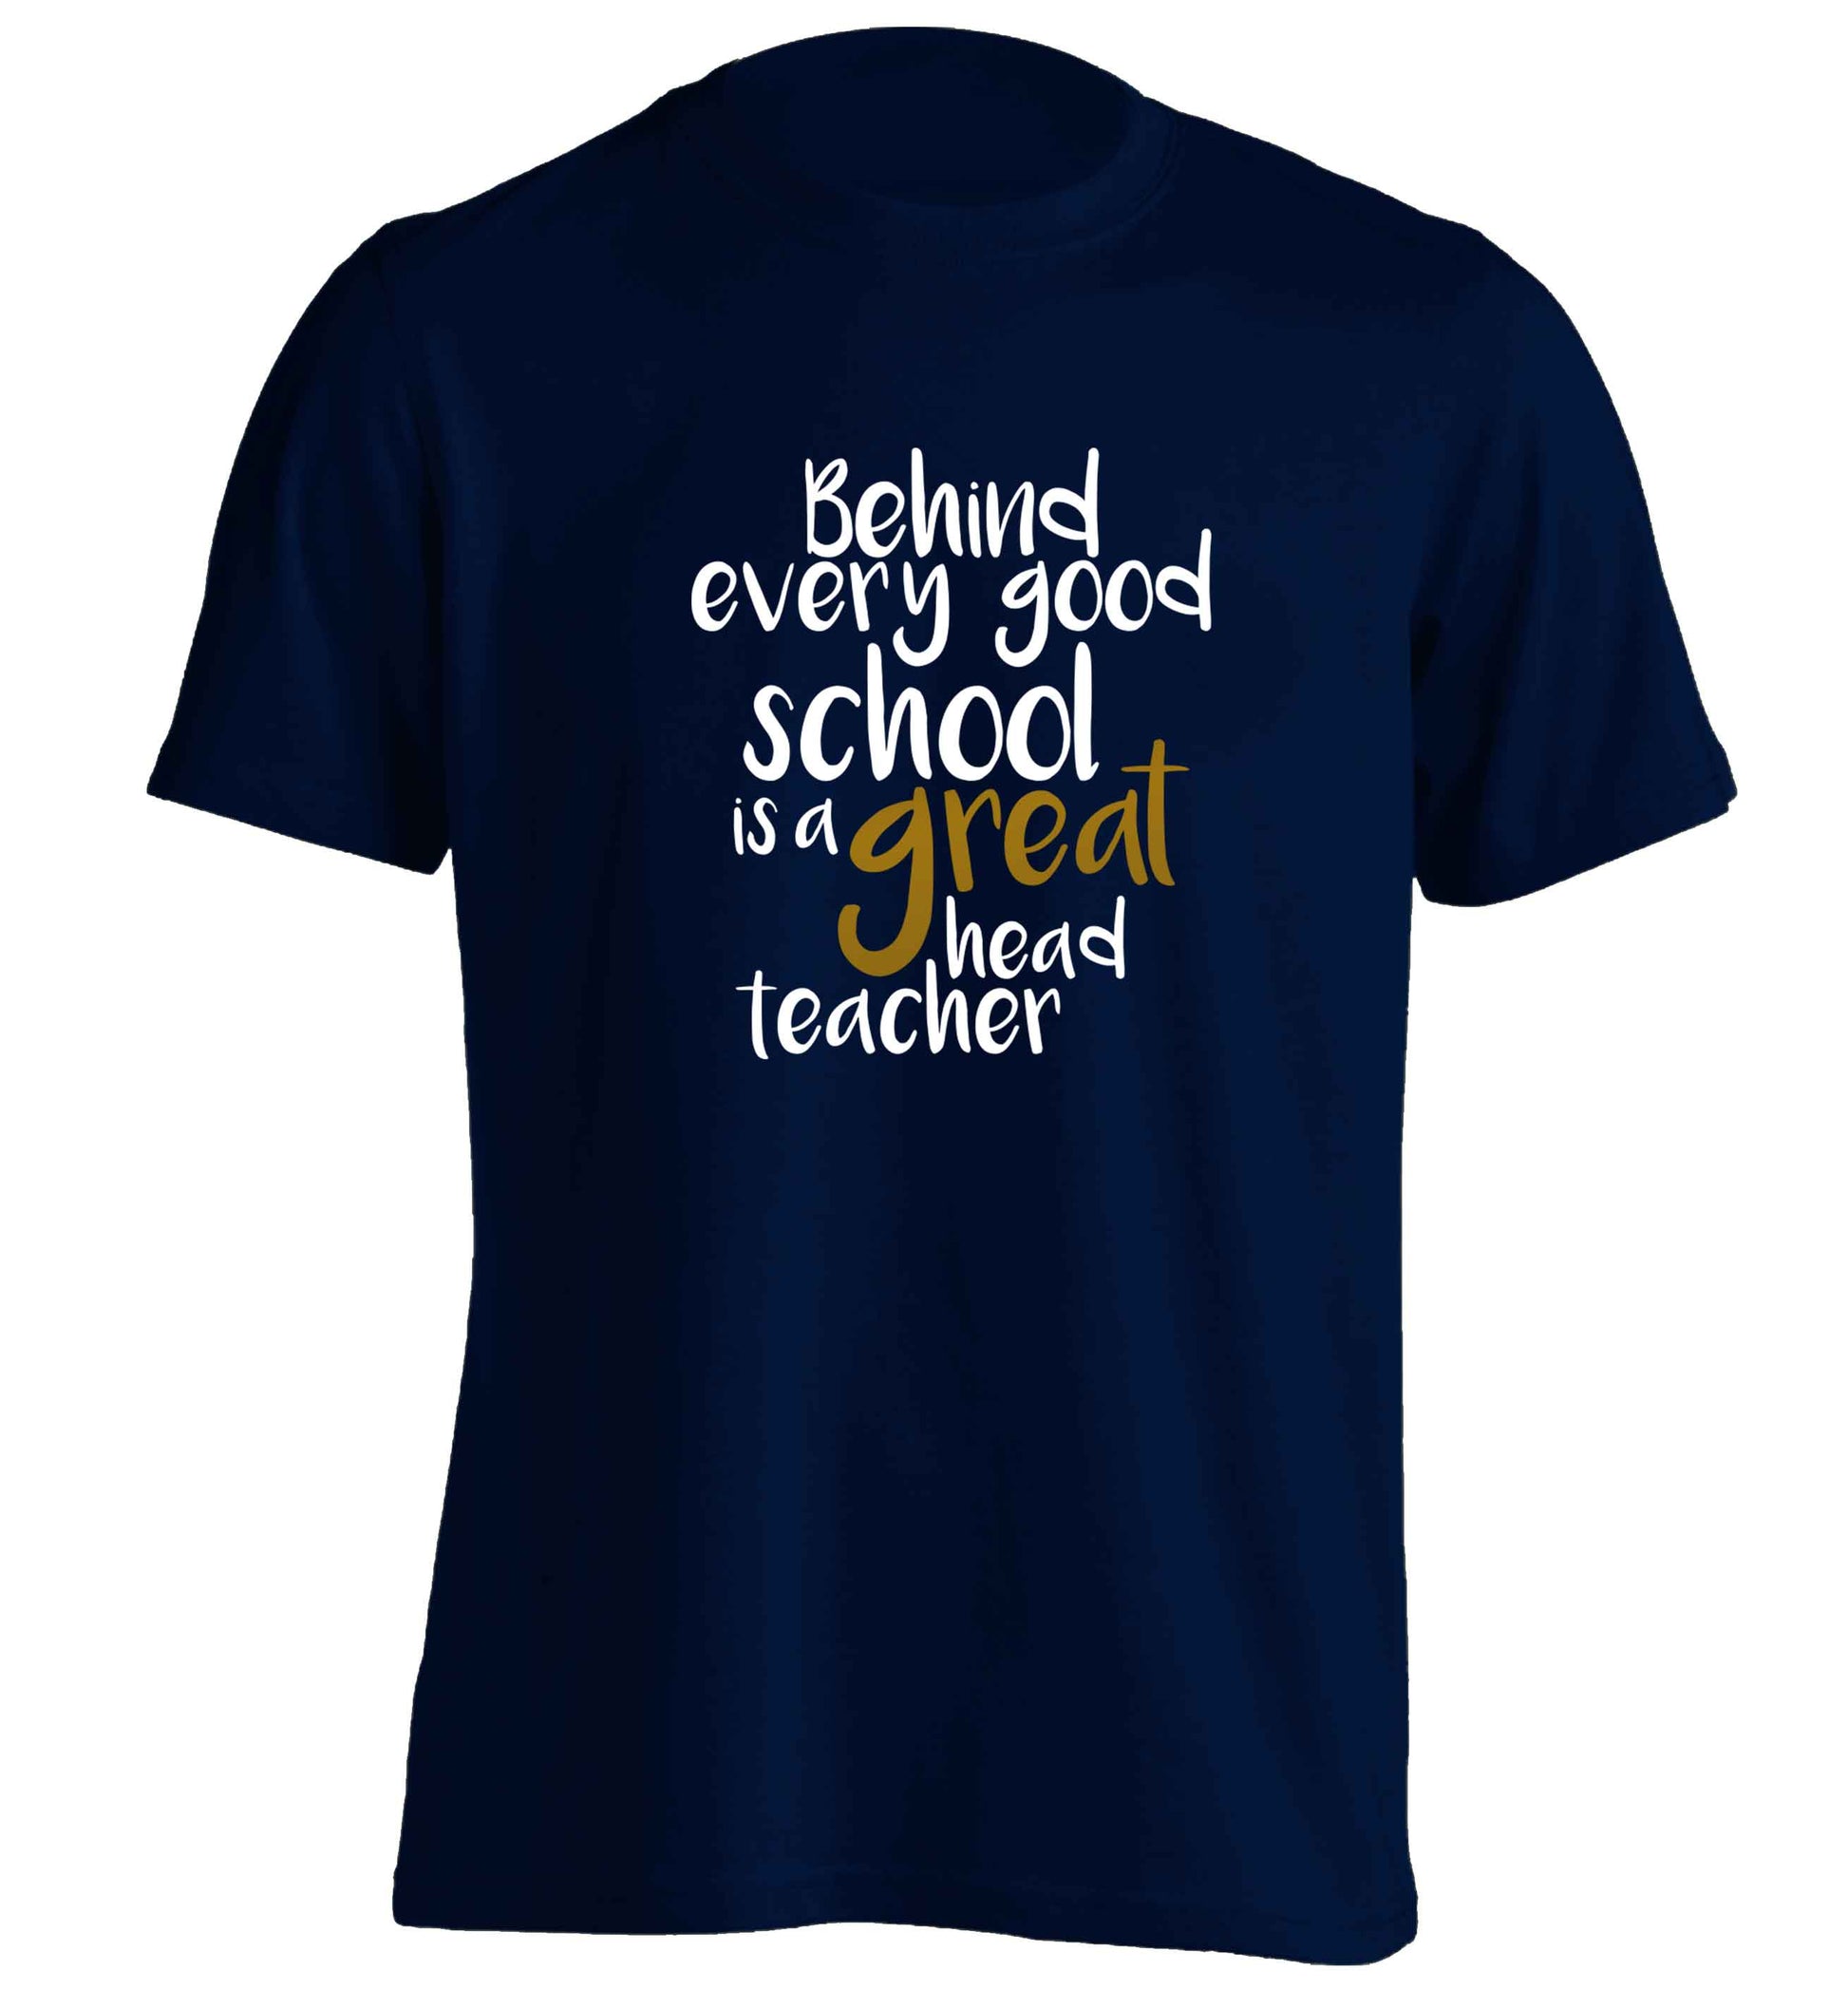 Behind every good school is a great head teacher adults unisex navy Tshirt 2XL